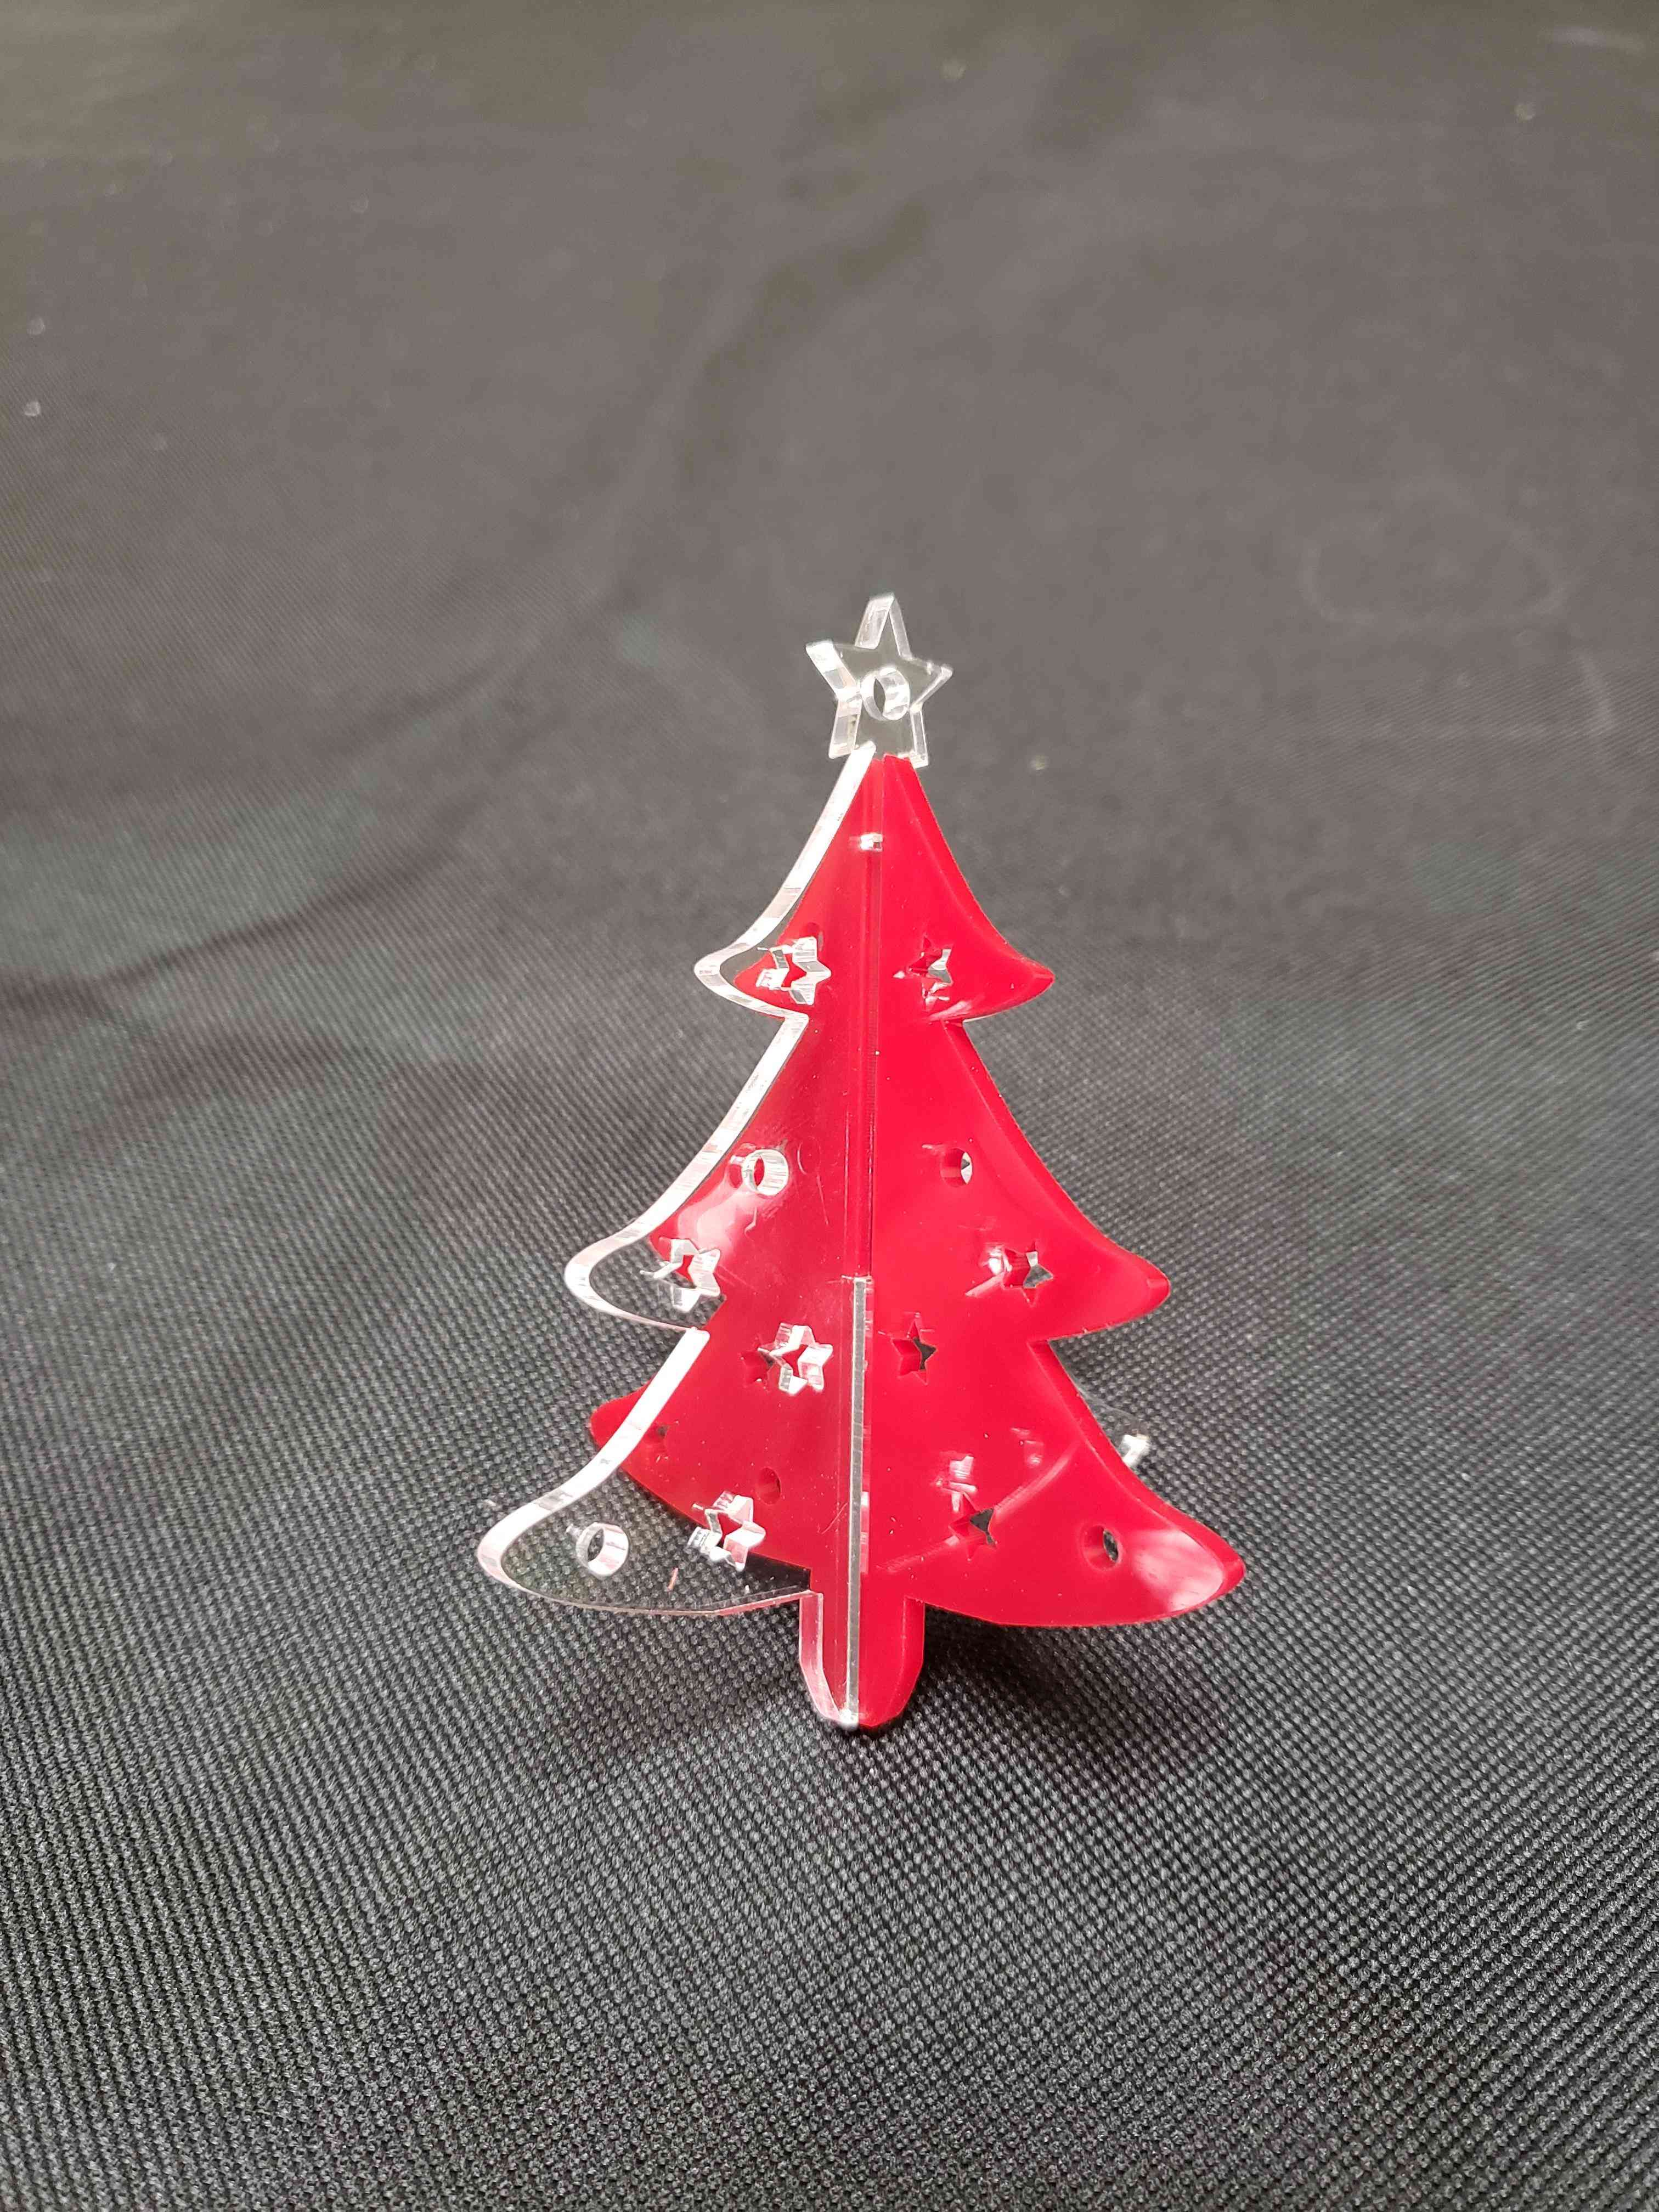 3D Laser Cut Christmas Tree Ornament (4